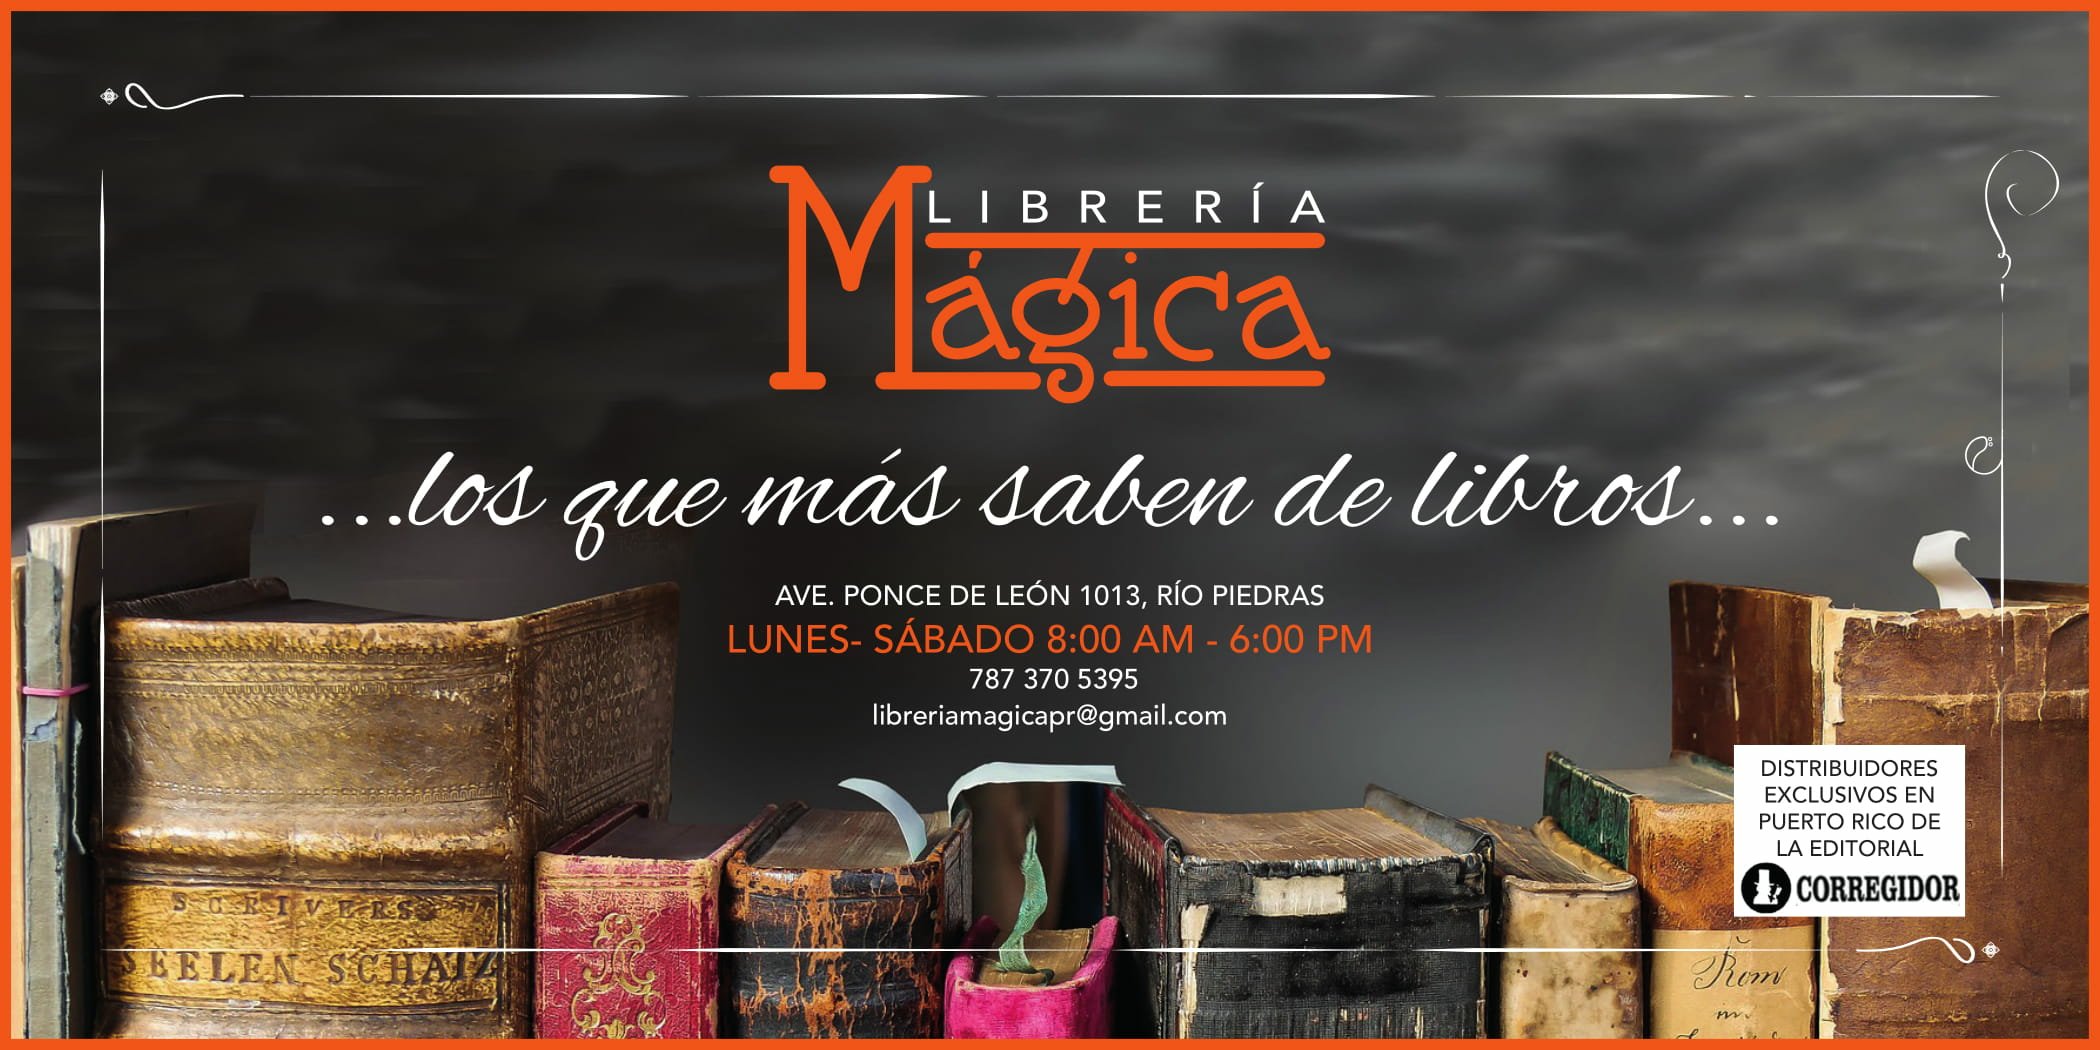 libreria magica adoquin times-11074249791..jpg